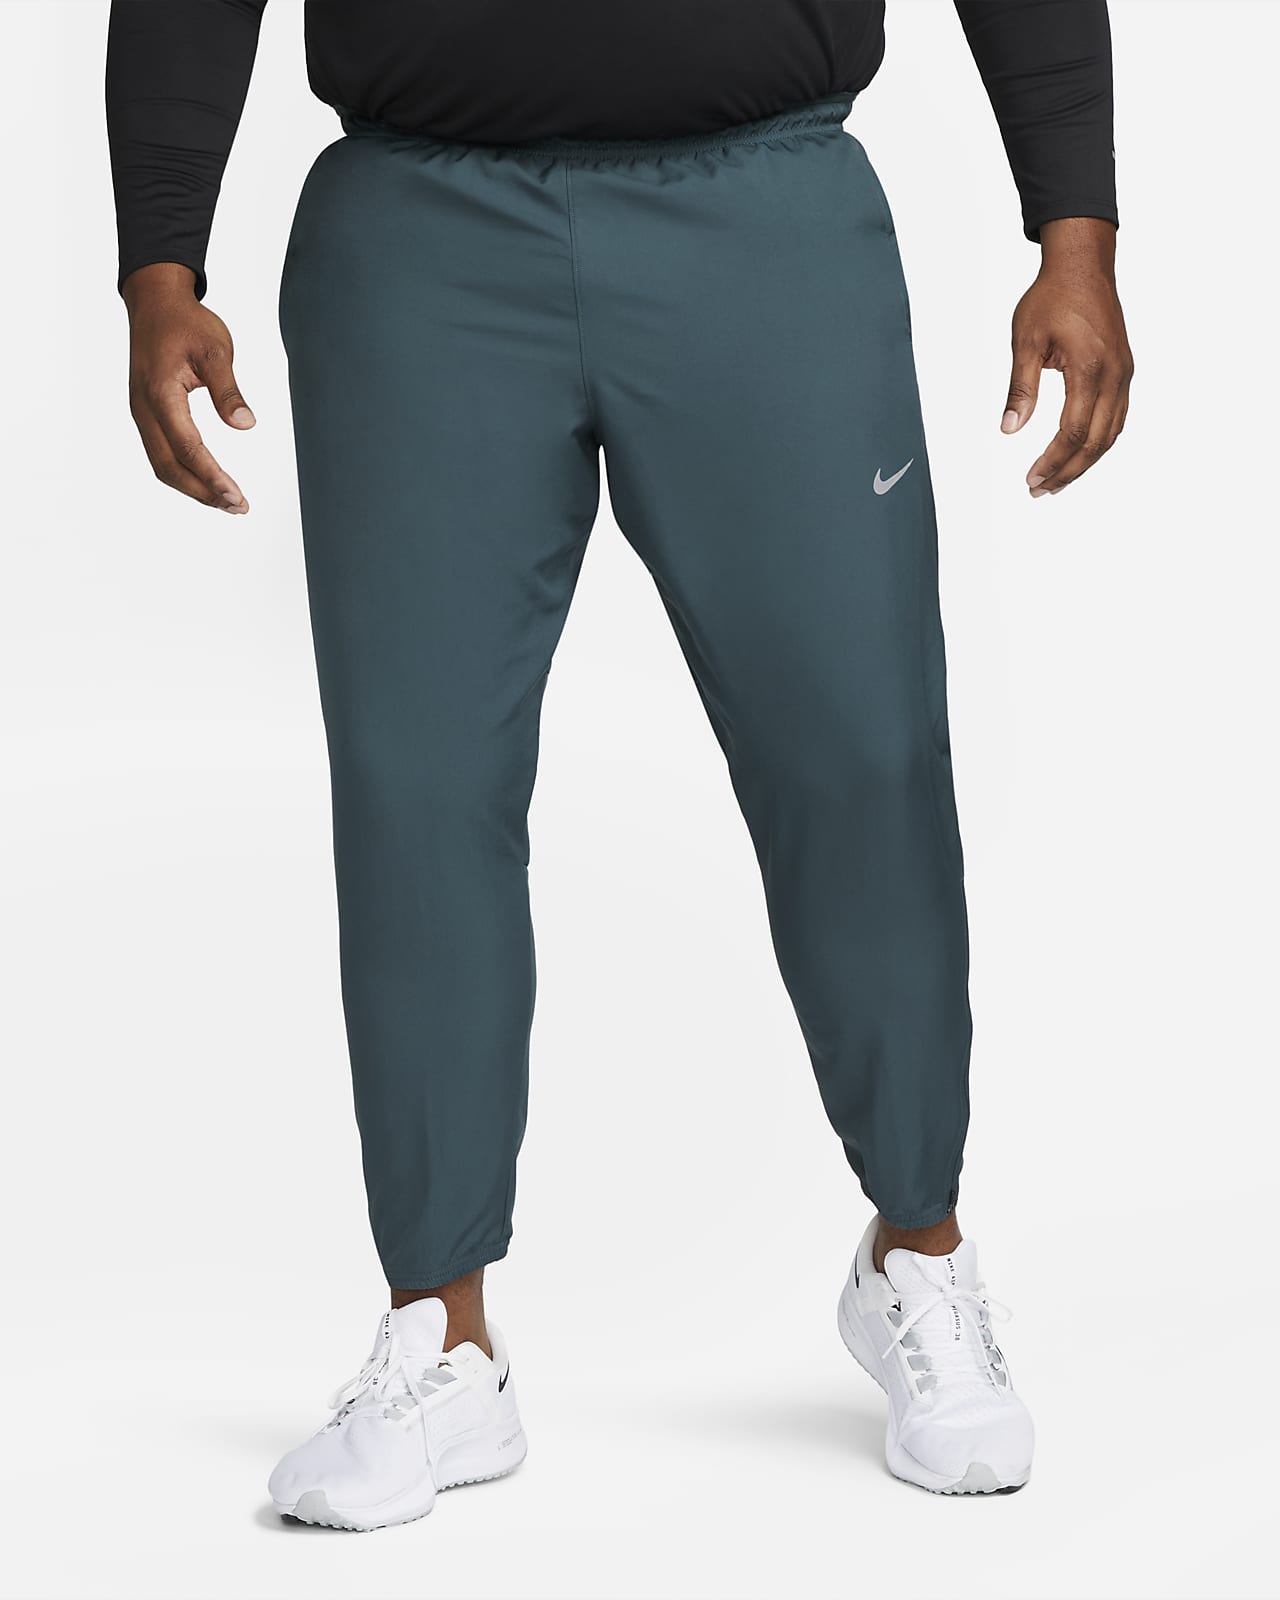 Laboratorium Baffle Embryo Nike Dri-FIT Challenger Men's Woven Running Pants. Nike.com